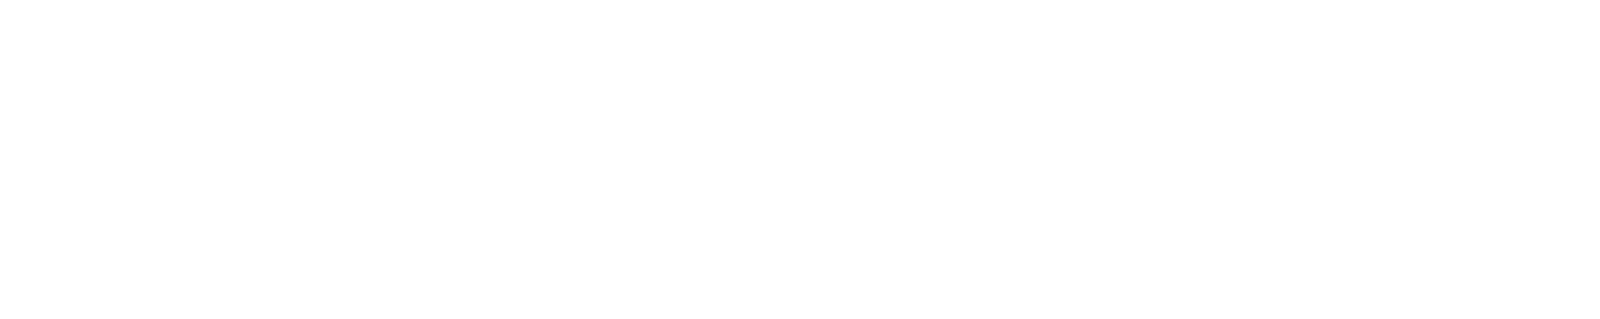 KMH Lawyers Ottawa Law Firm